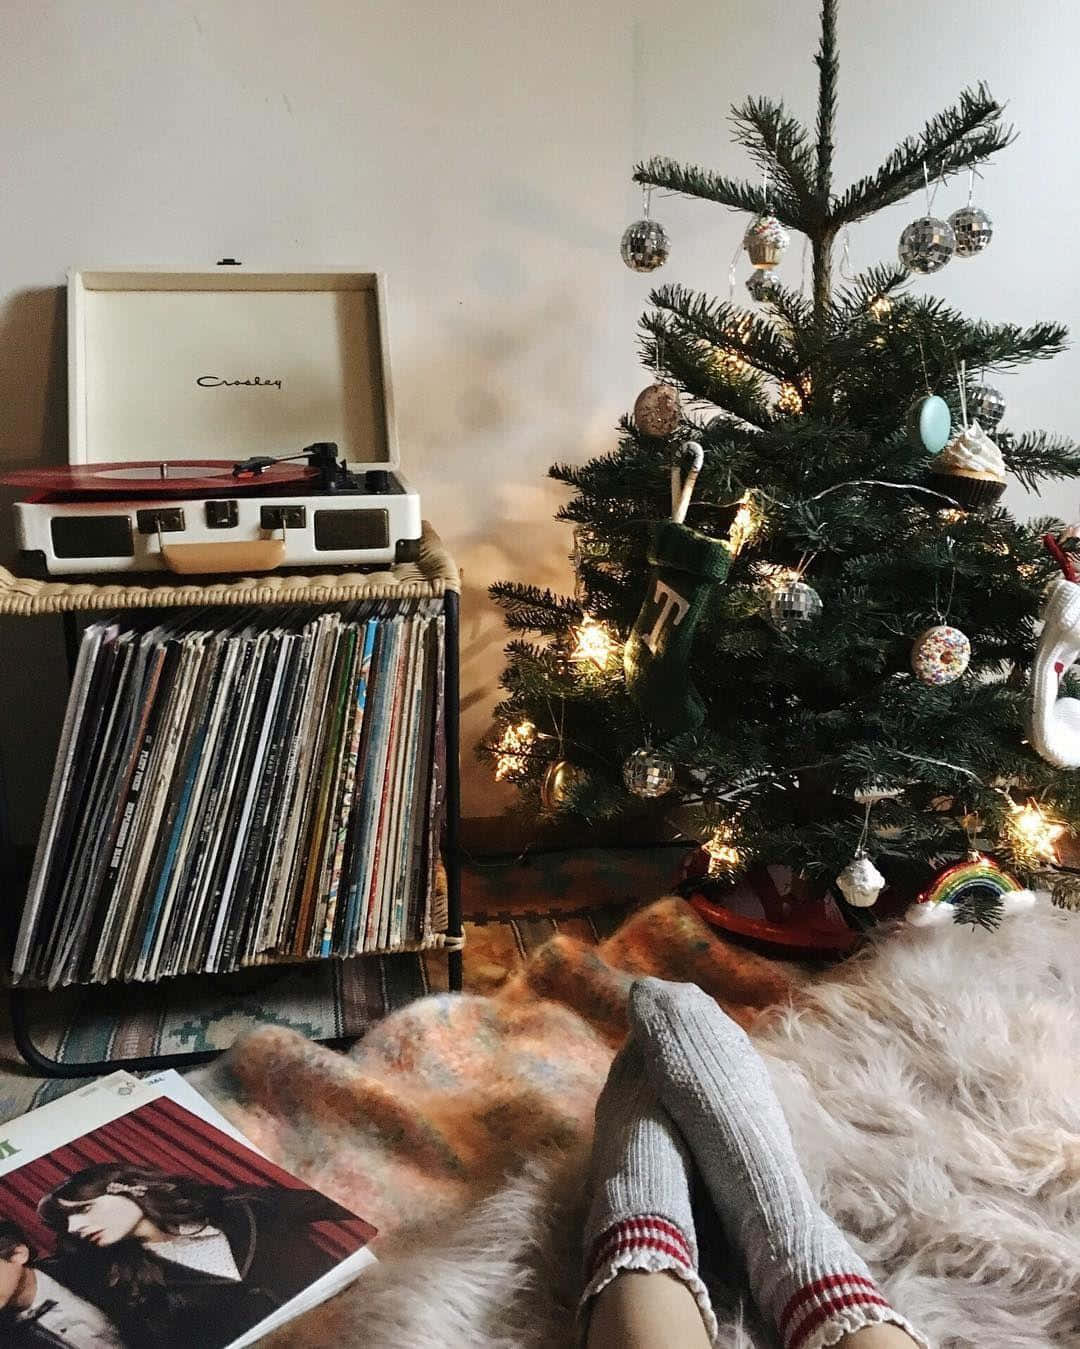 Vintage Christmas Record Playerand Tree.jpg Wallpaper